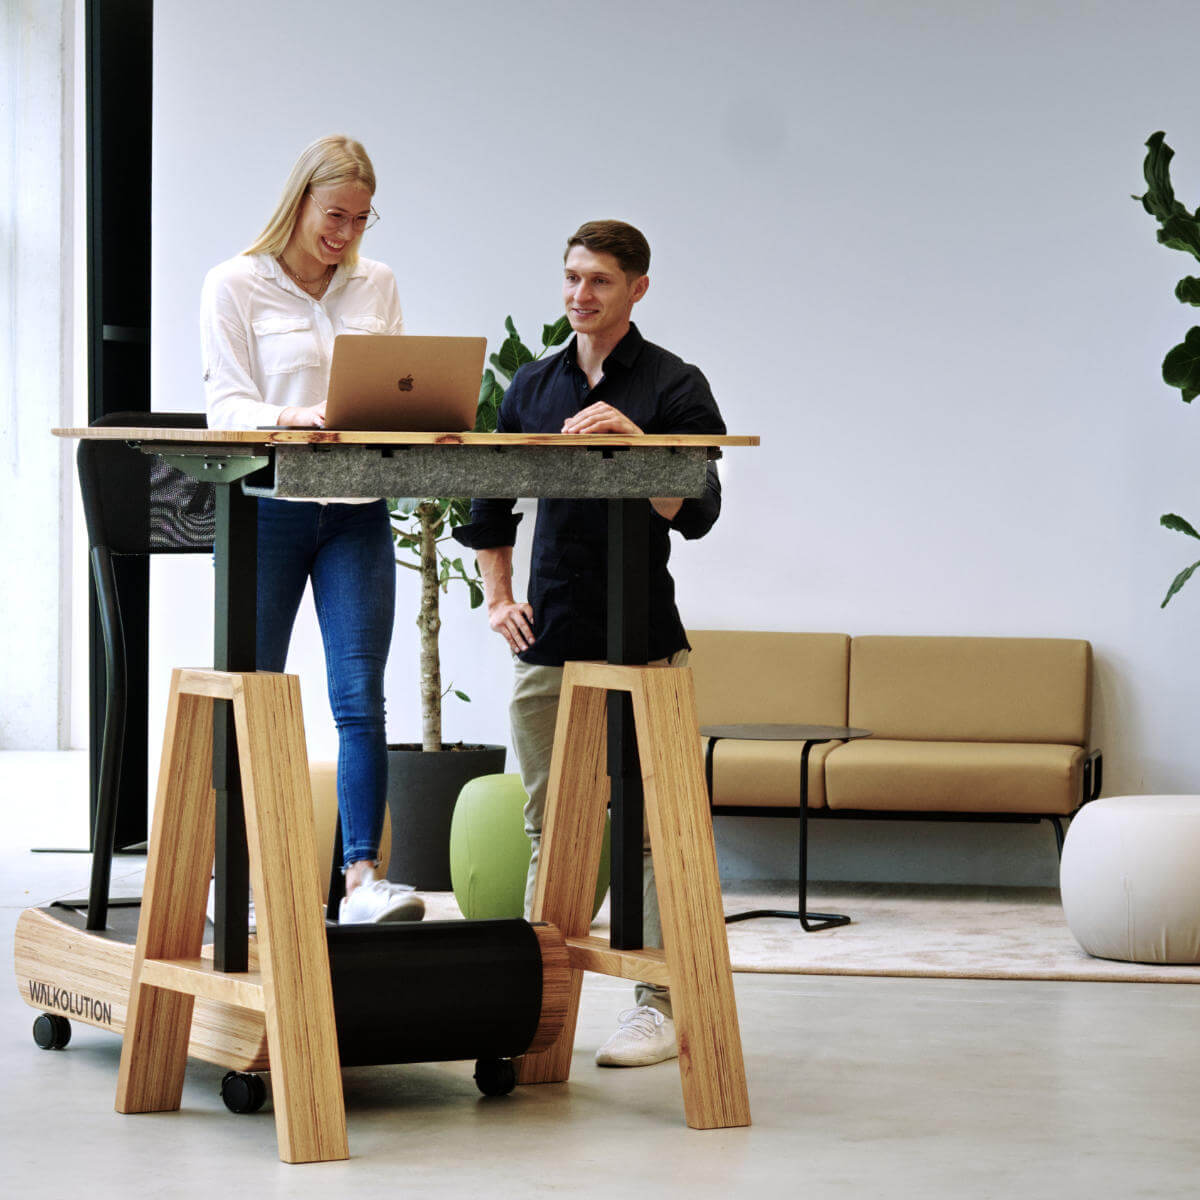 Treadmill desk Standing desk wood modern office height adjustable Walkolution Germany